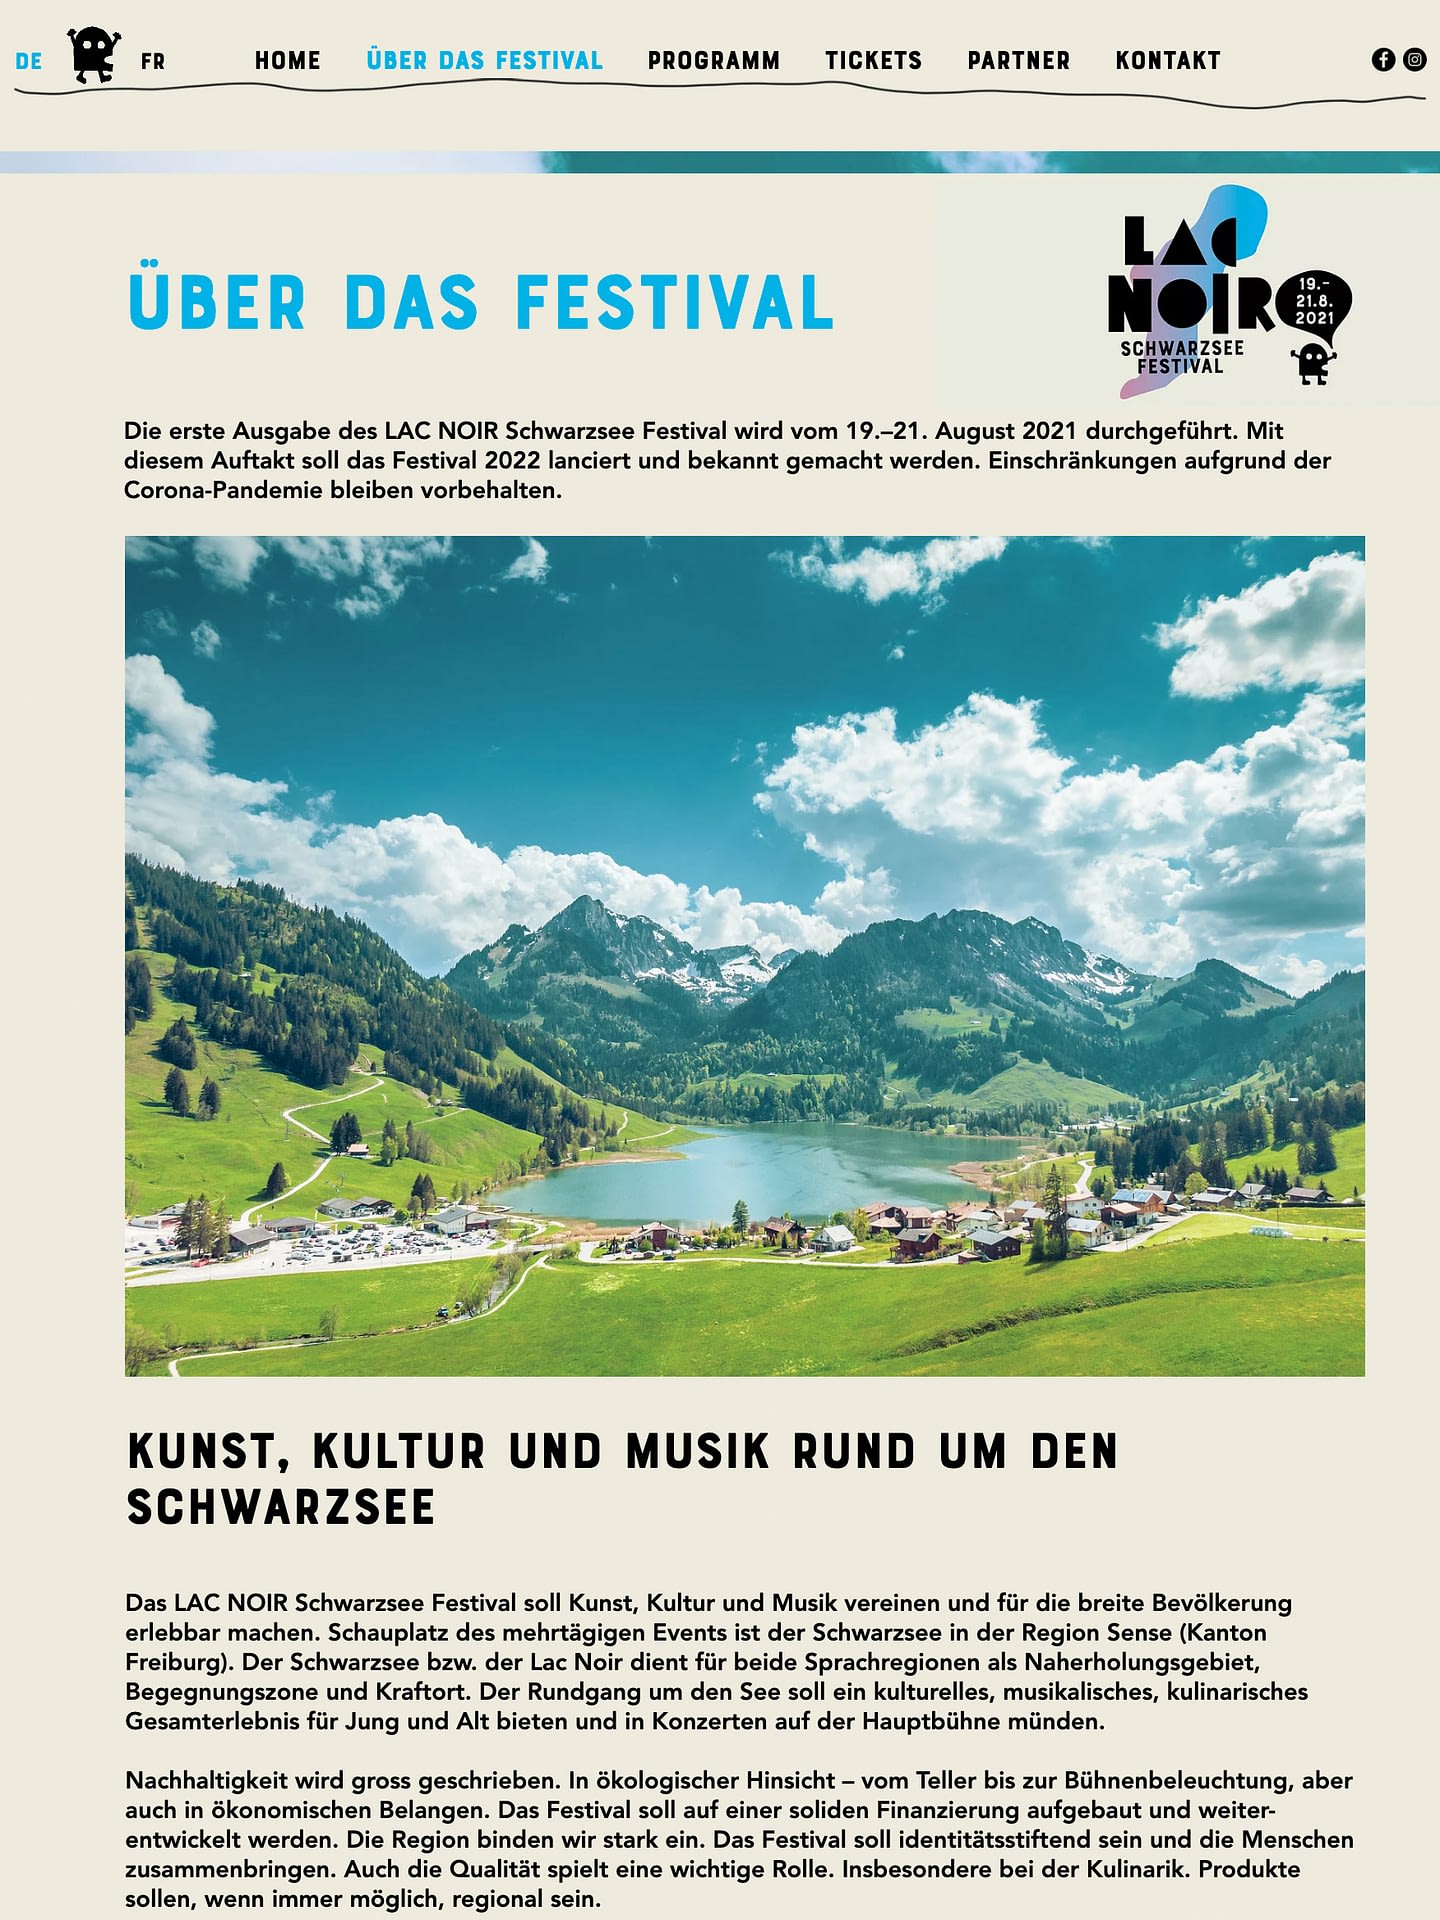 Schwarzsee Lac Noir Festival by STEMUTZ, 01.06.2021